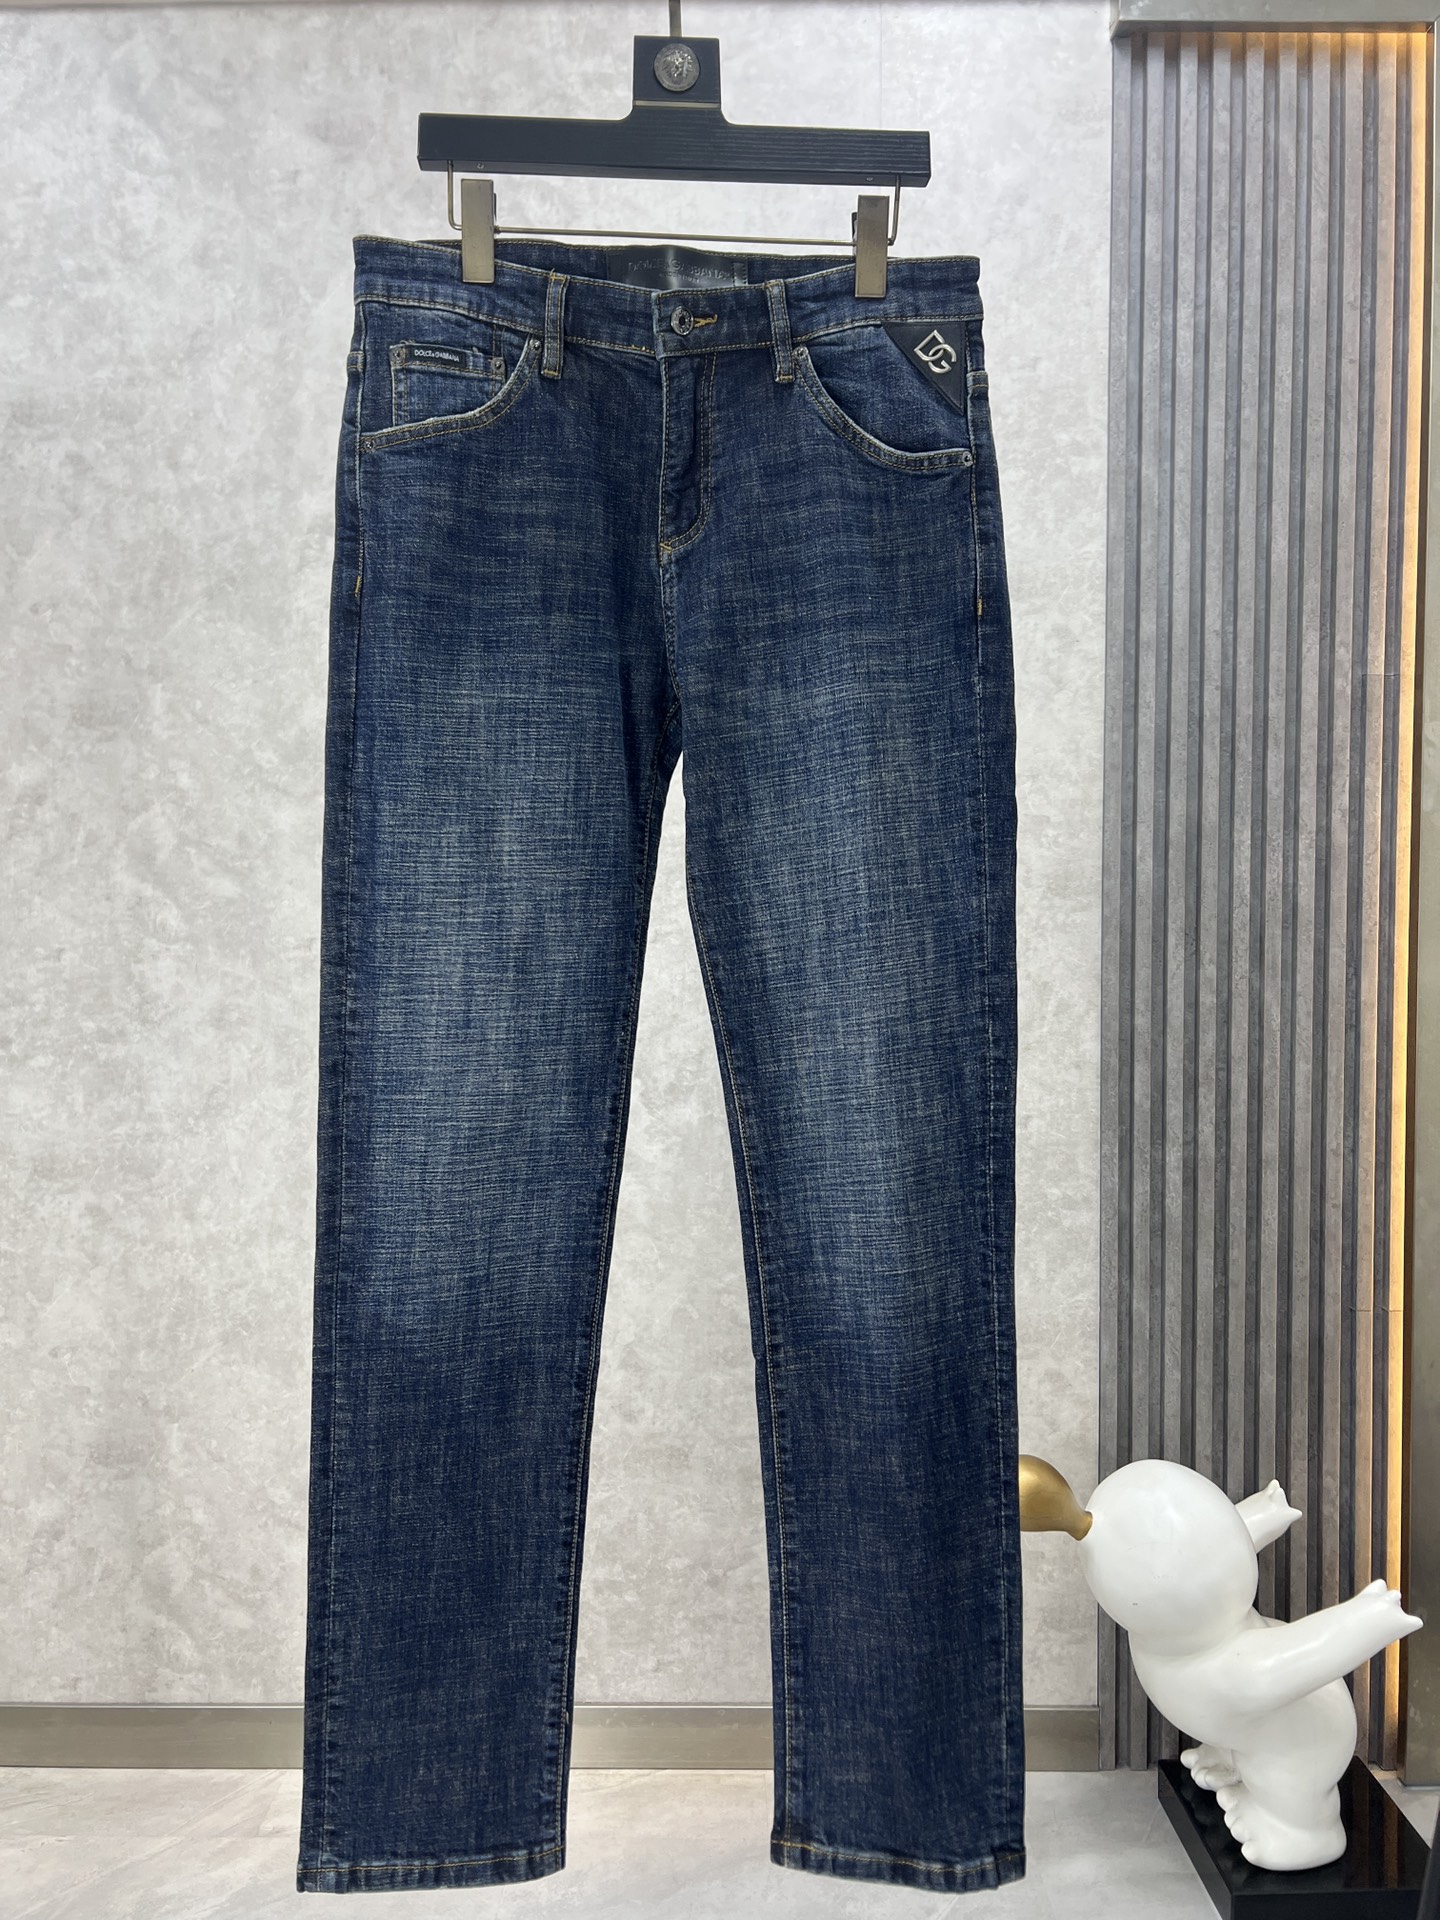 Clothing Jeans Denim